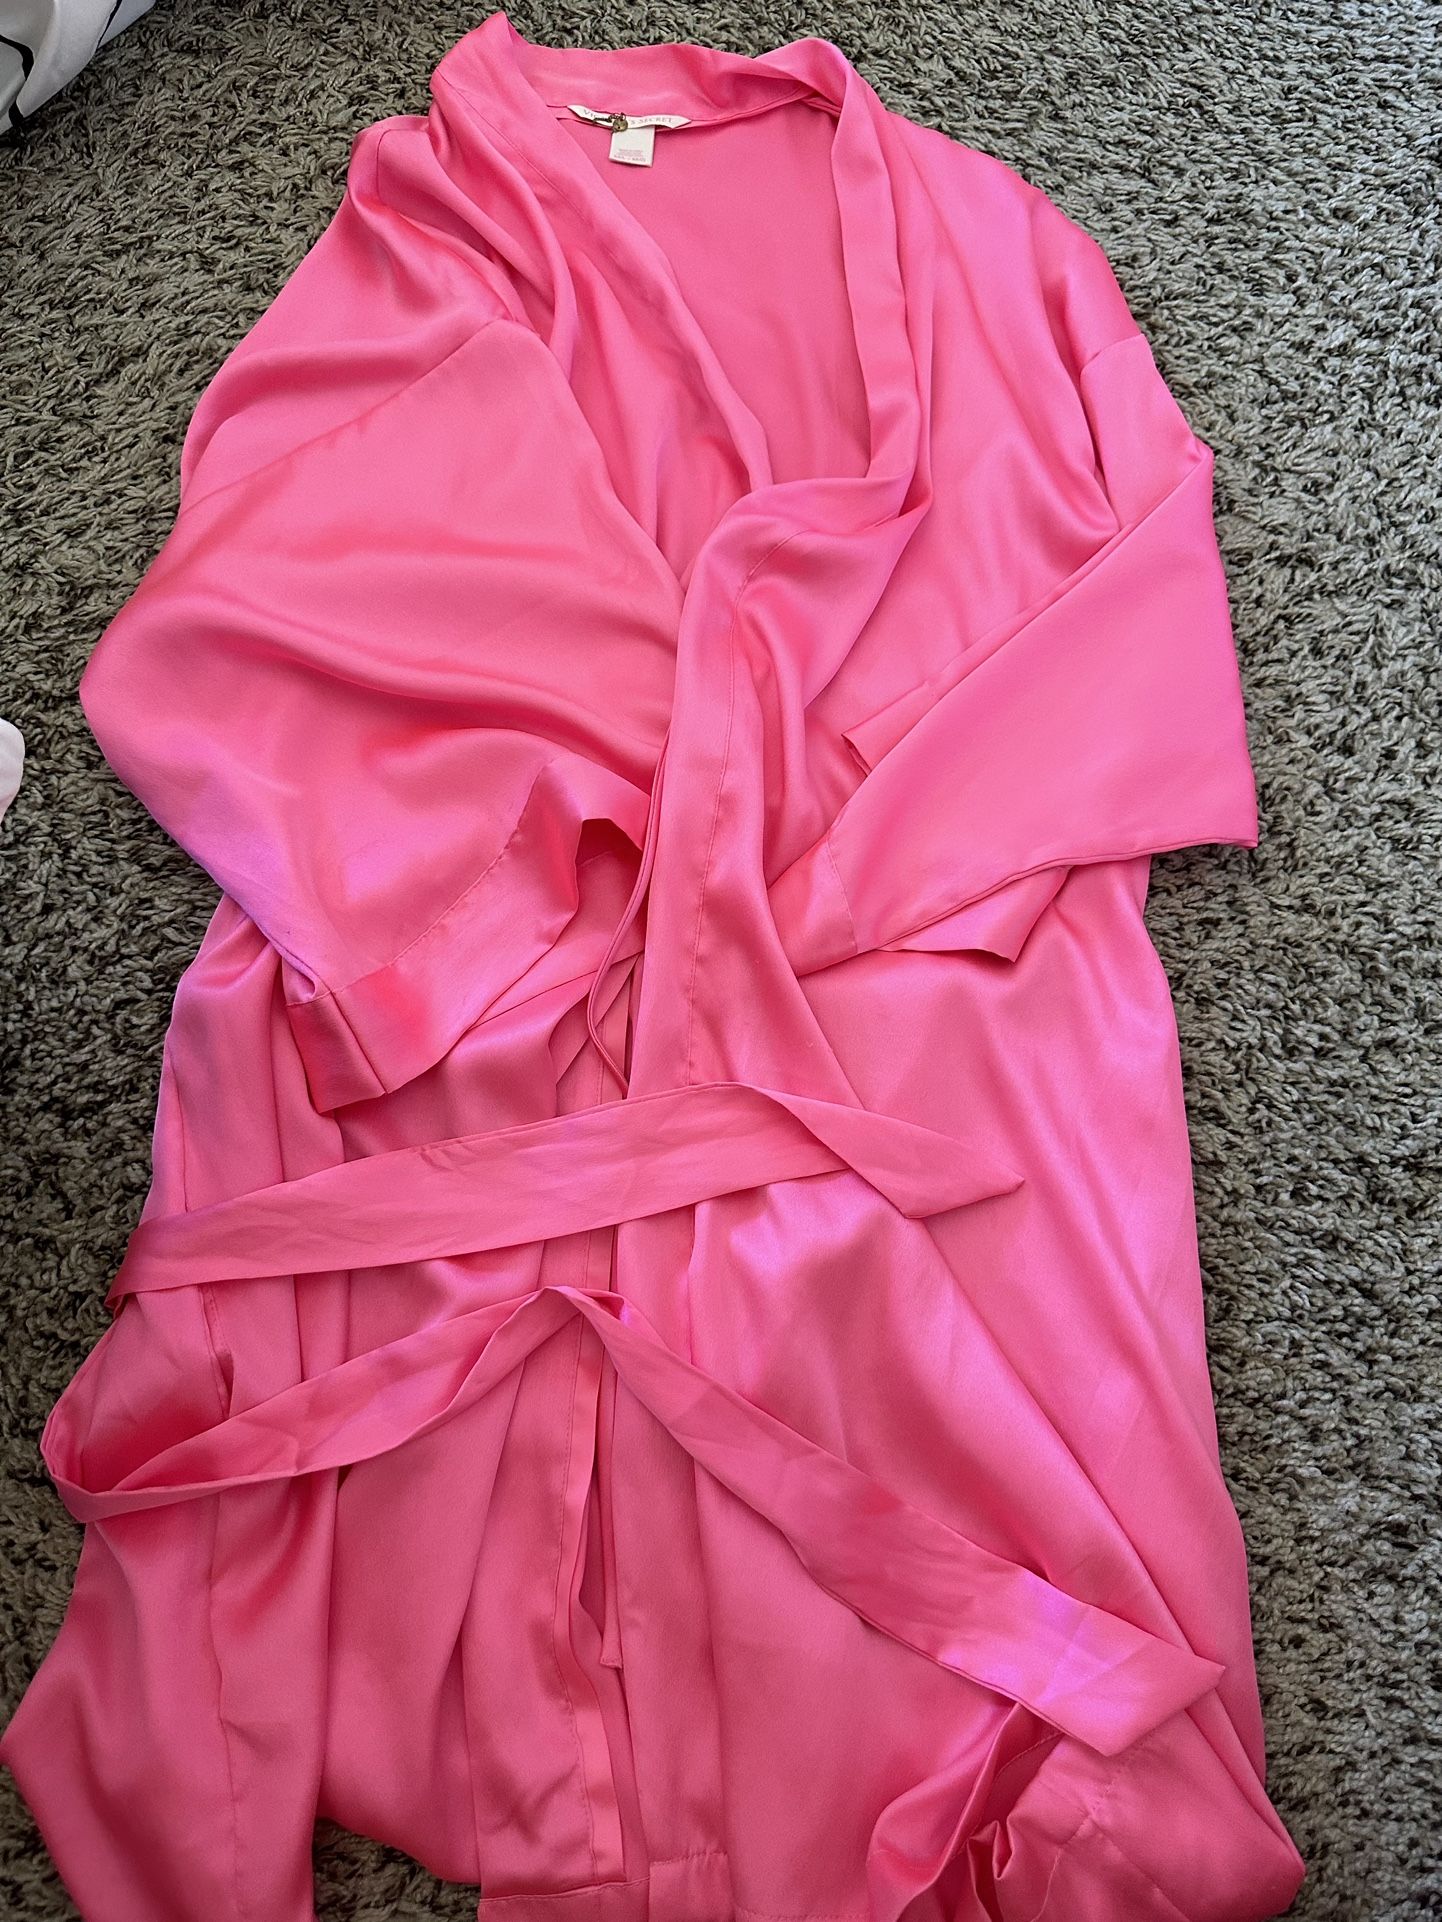 Victoria secret Pink Nightgown  Robe New